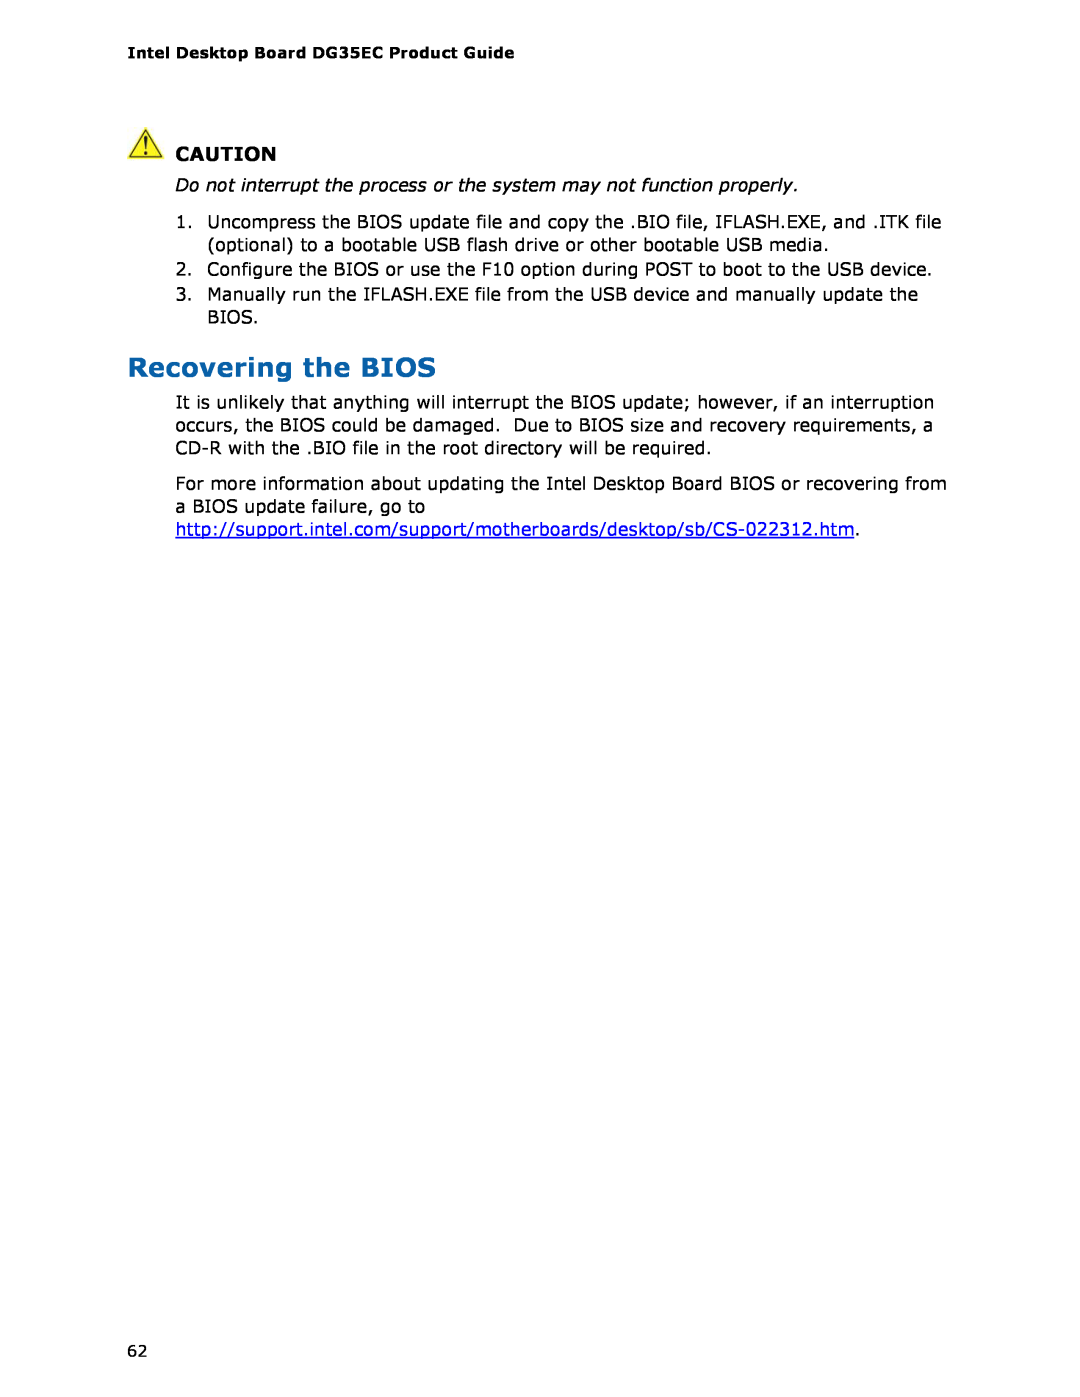 Intel Intel Desktop Board, DG35EC manual Recovering the BIOS 